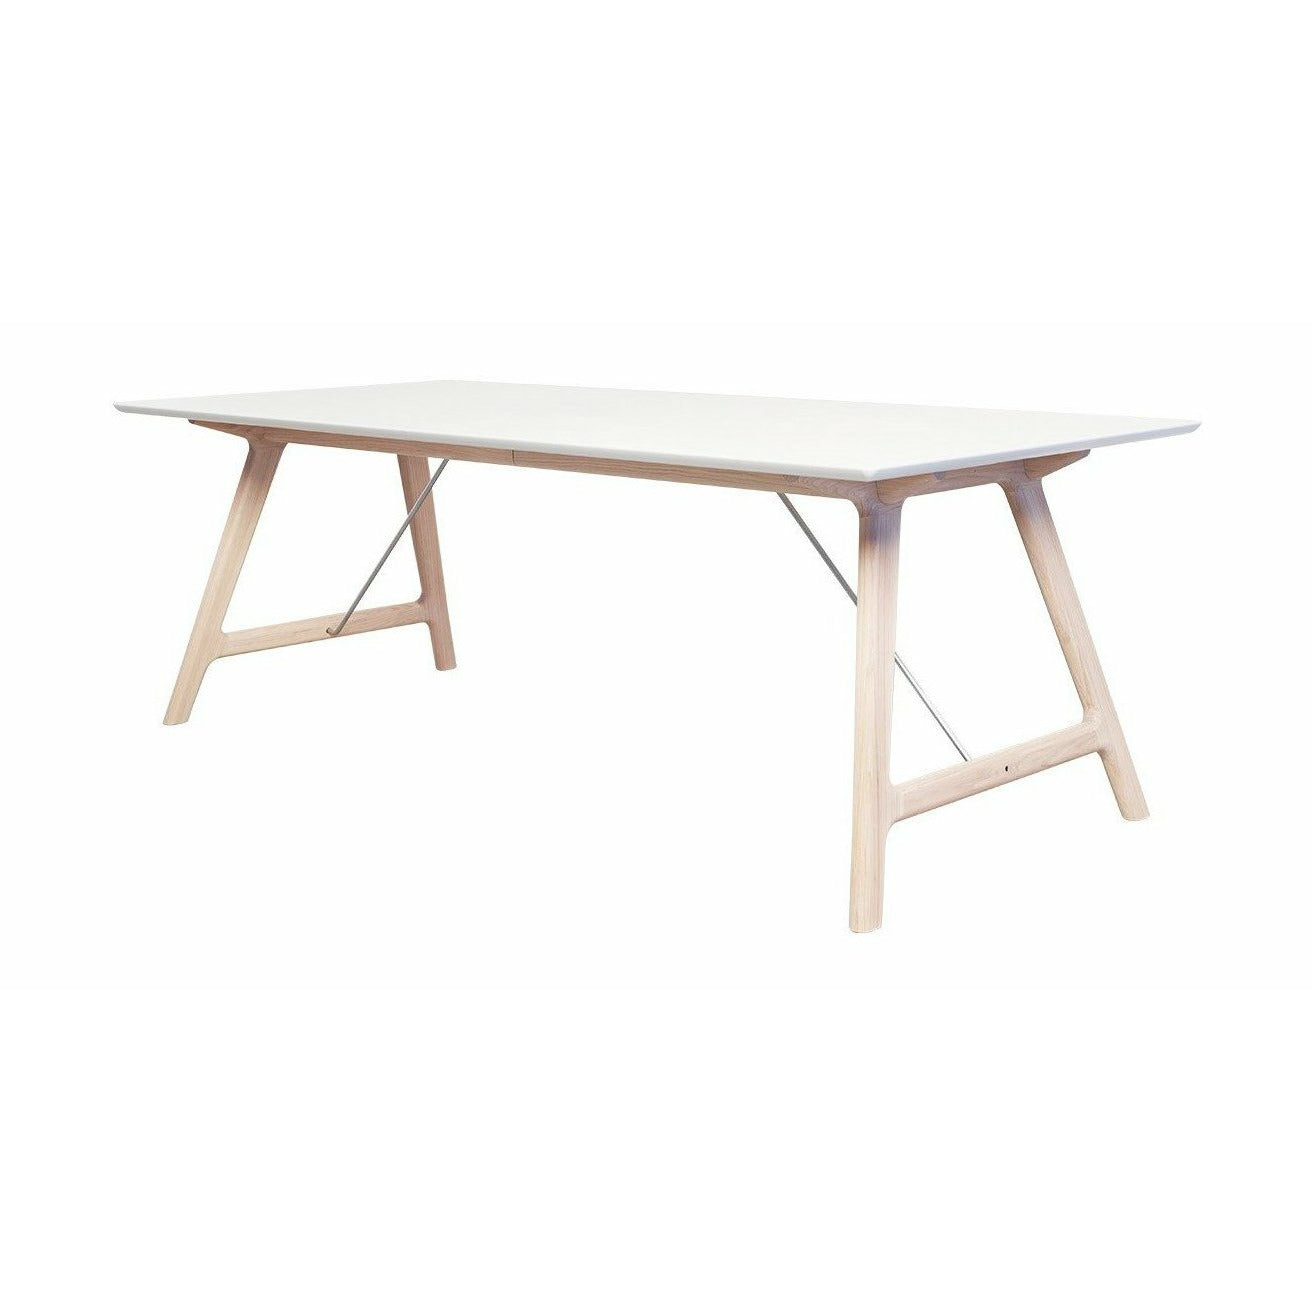 Andersen Furniture T7 utvidbart bord hvitt laminat, såpes eik, 220cm